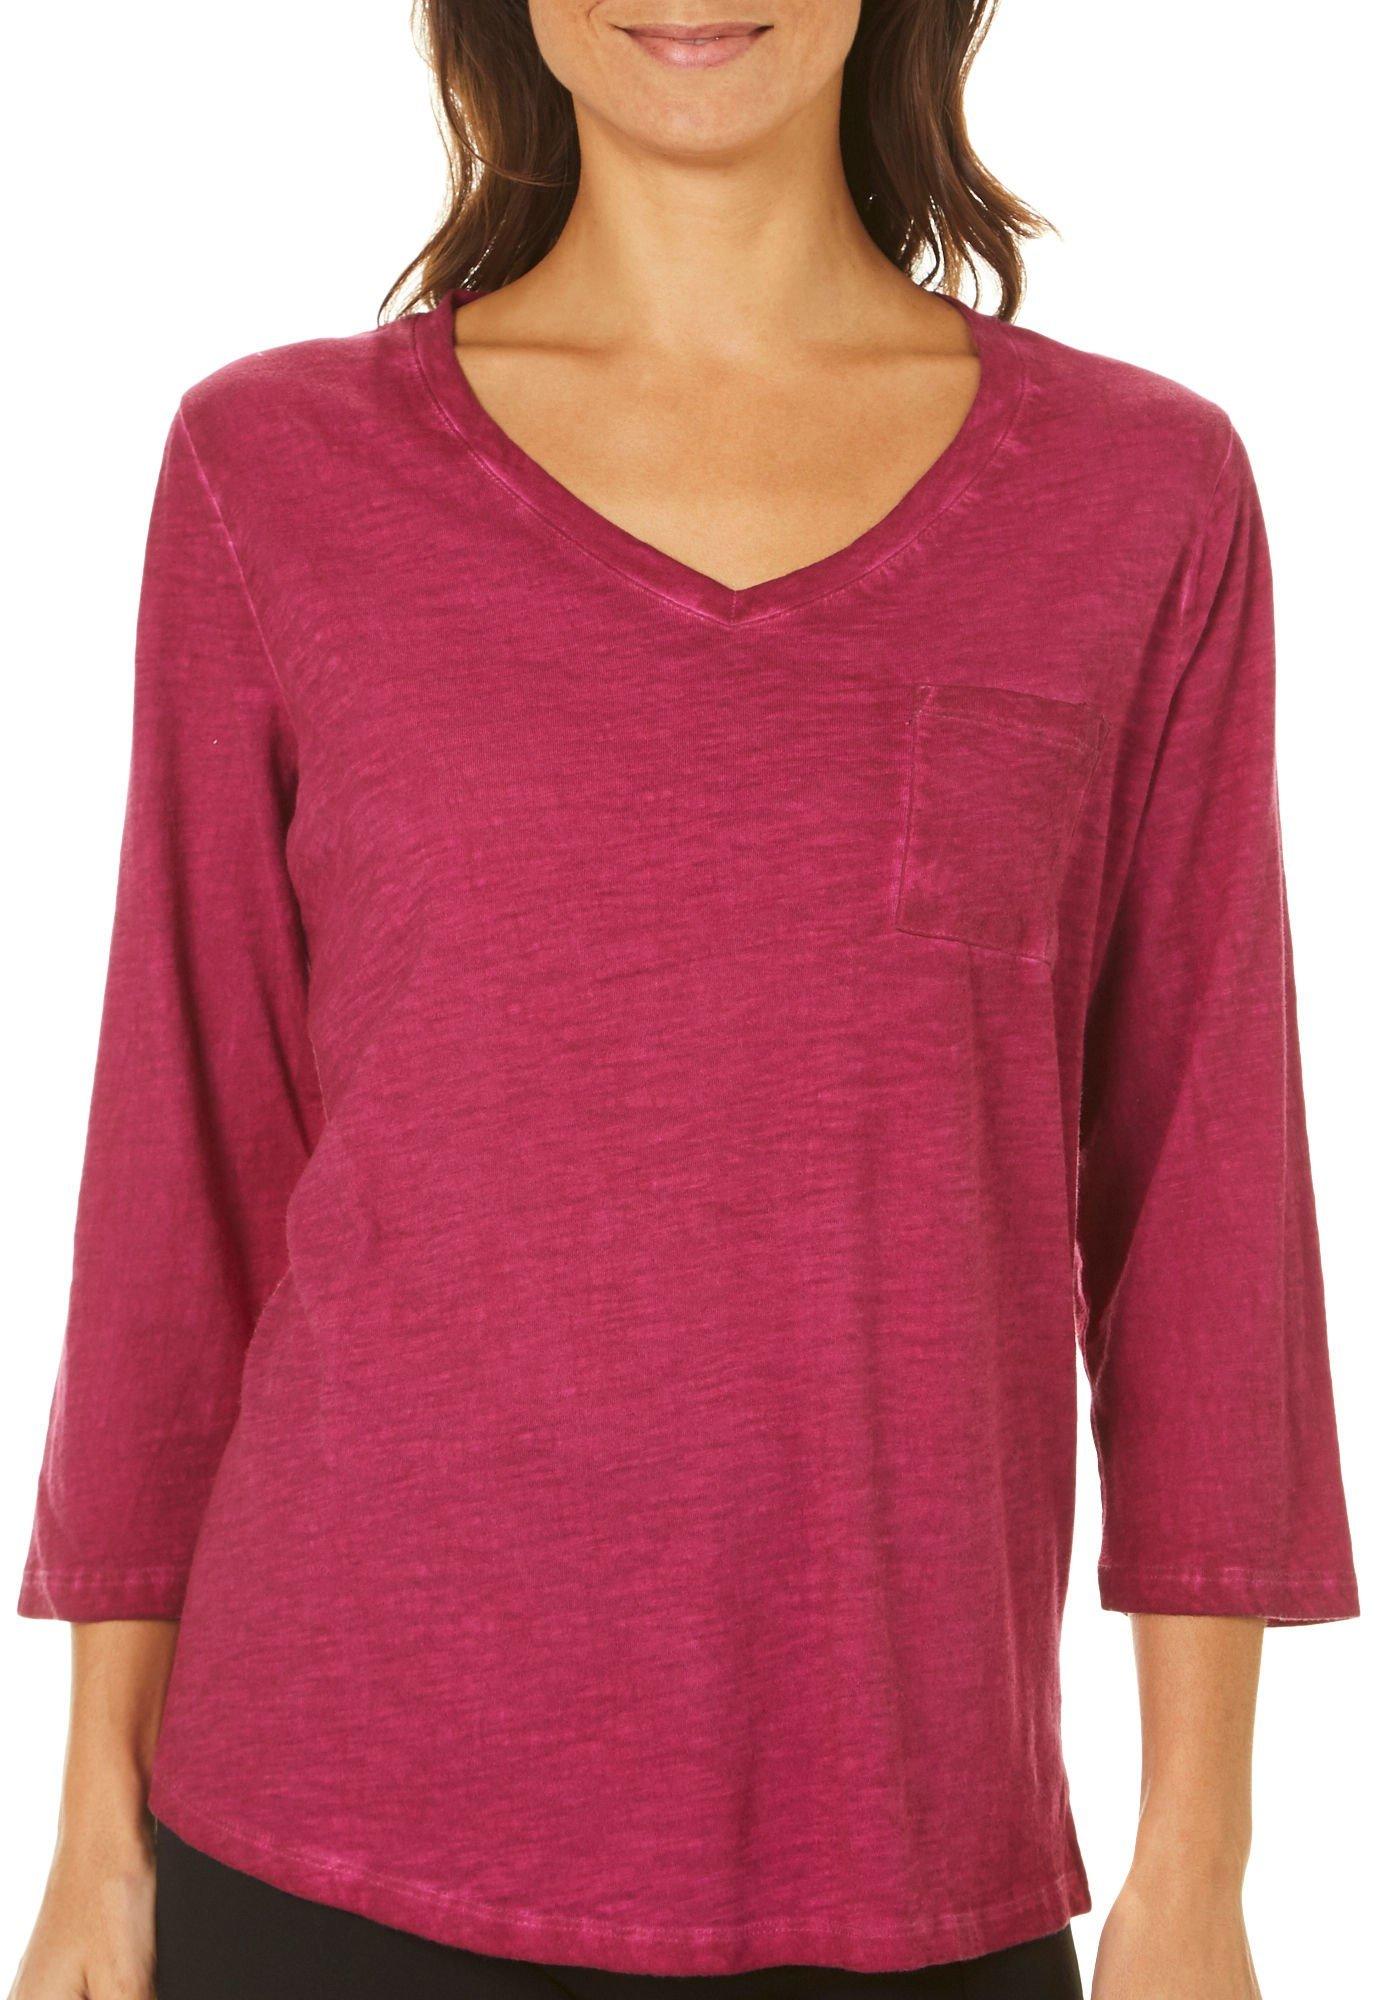 Women's 3/4 Sleeve Tops, Shirts & Blouses | Bealls Florida